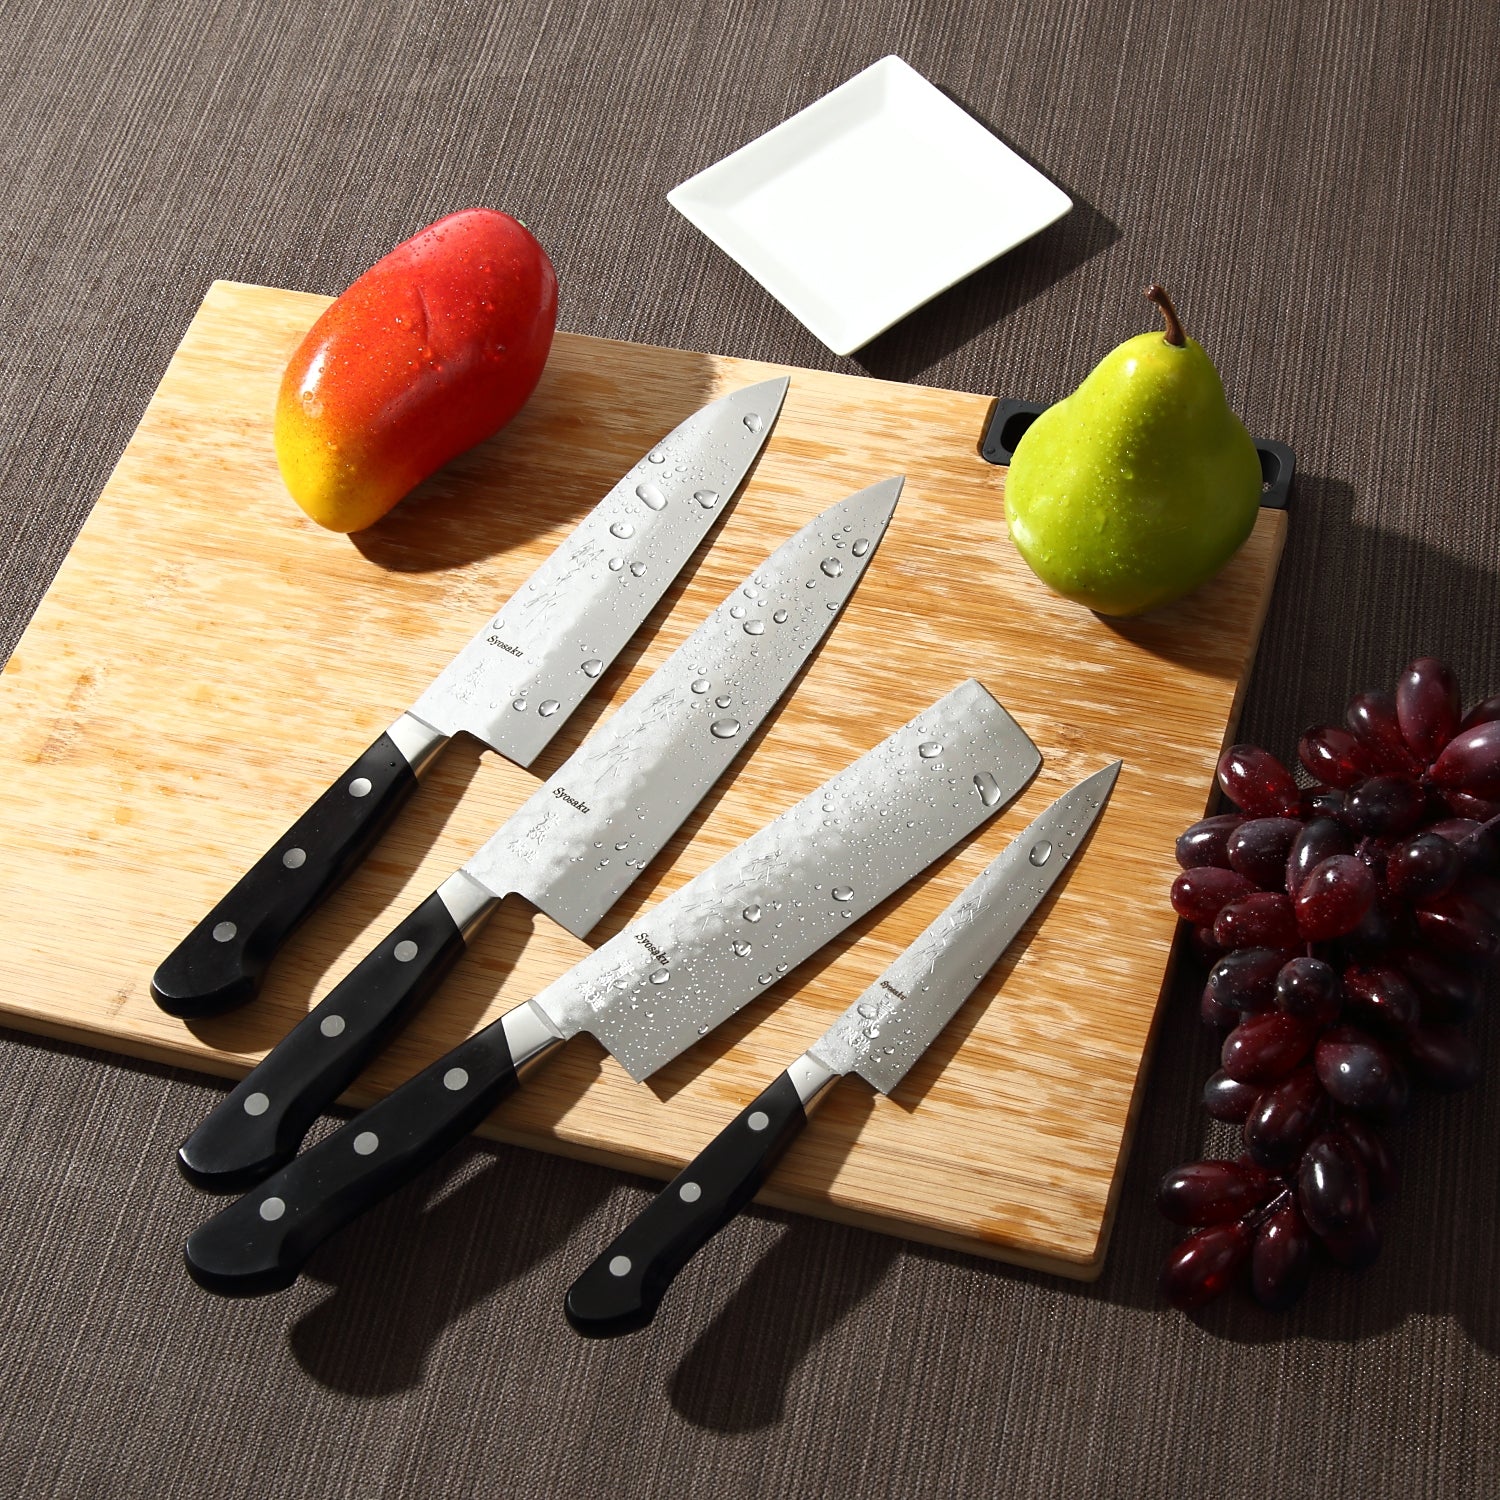 Syosaku Japanese Multi Purpose Best Sharp Kitchen Chef Knife Aoko(Blue Steel)-No.2 Pakkawood Handle, Santoku 7-inch (180mm) with Magnolia Sheath Saya